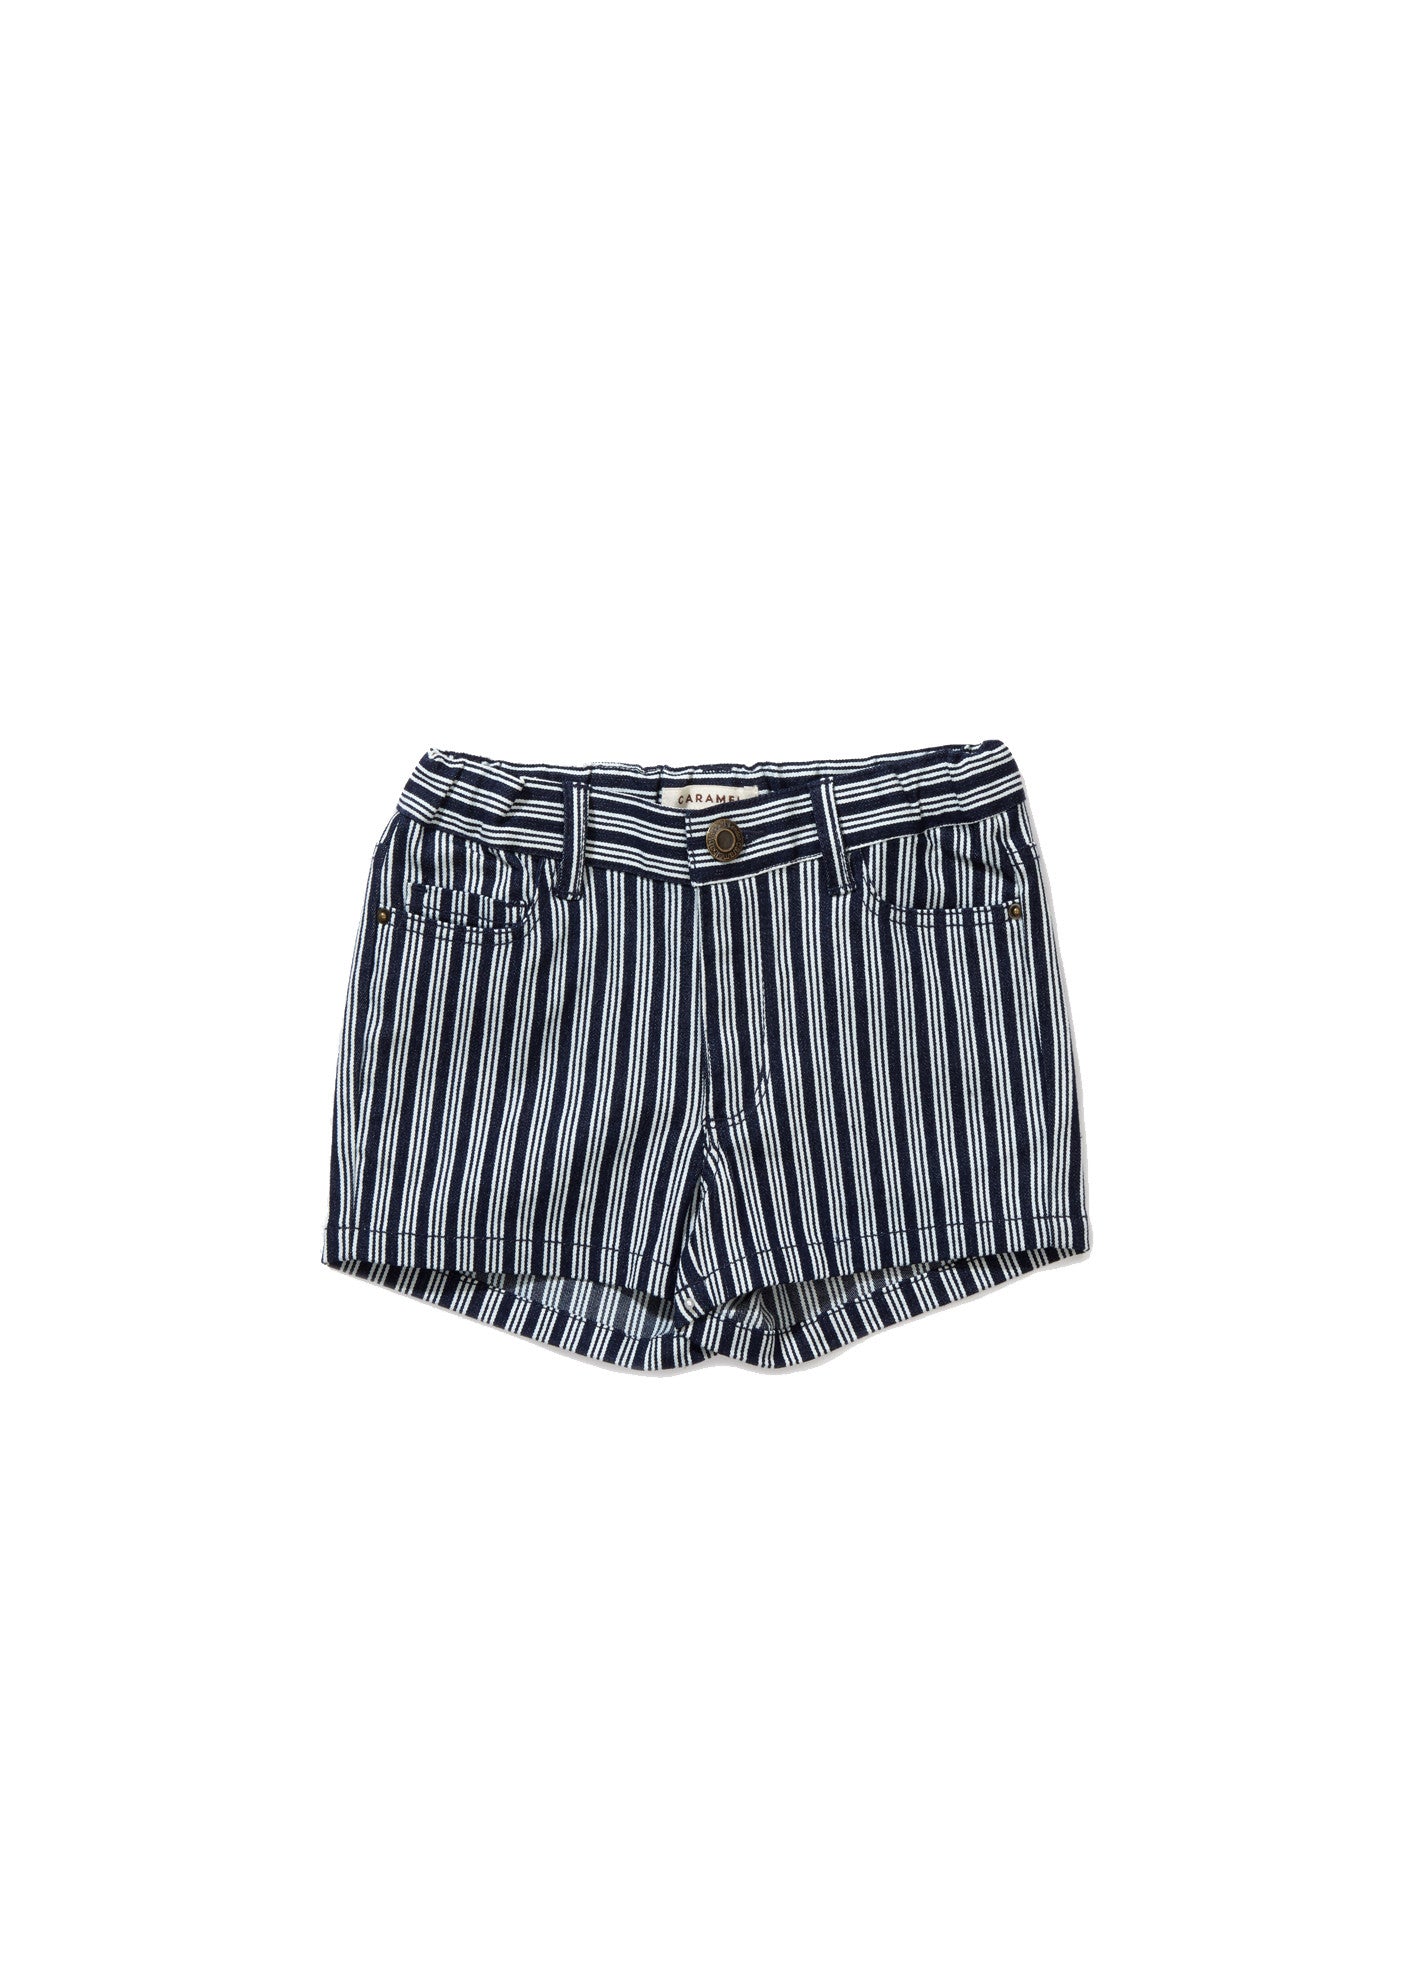 Boys Blue & White Striped Shorts